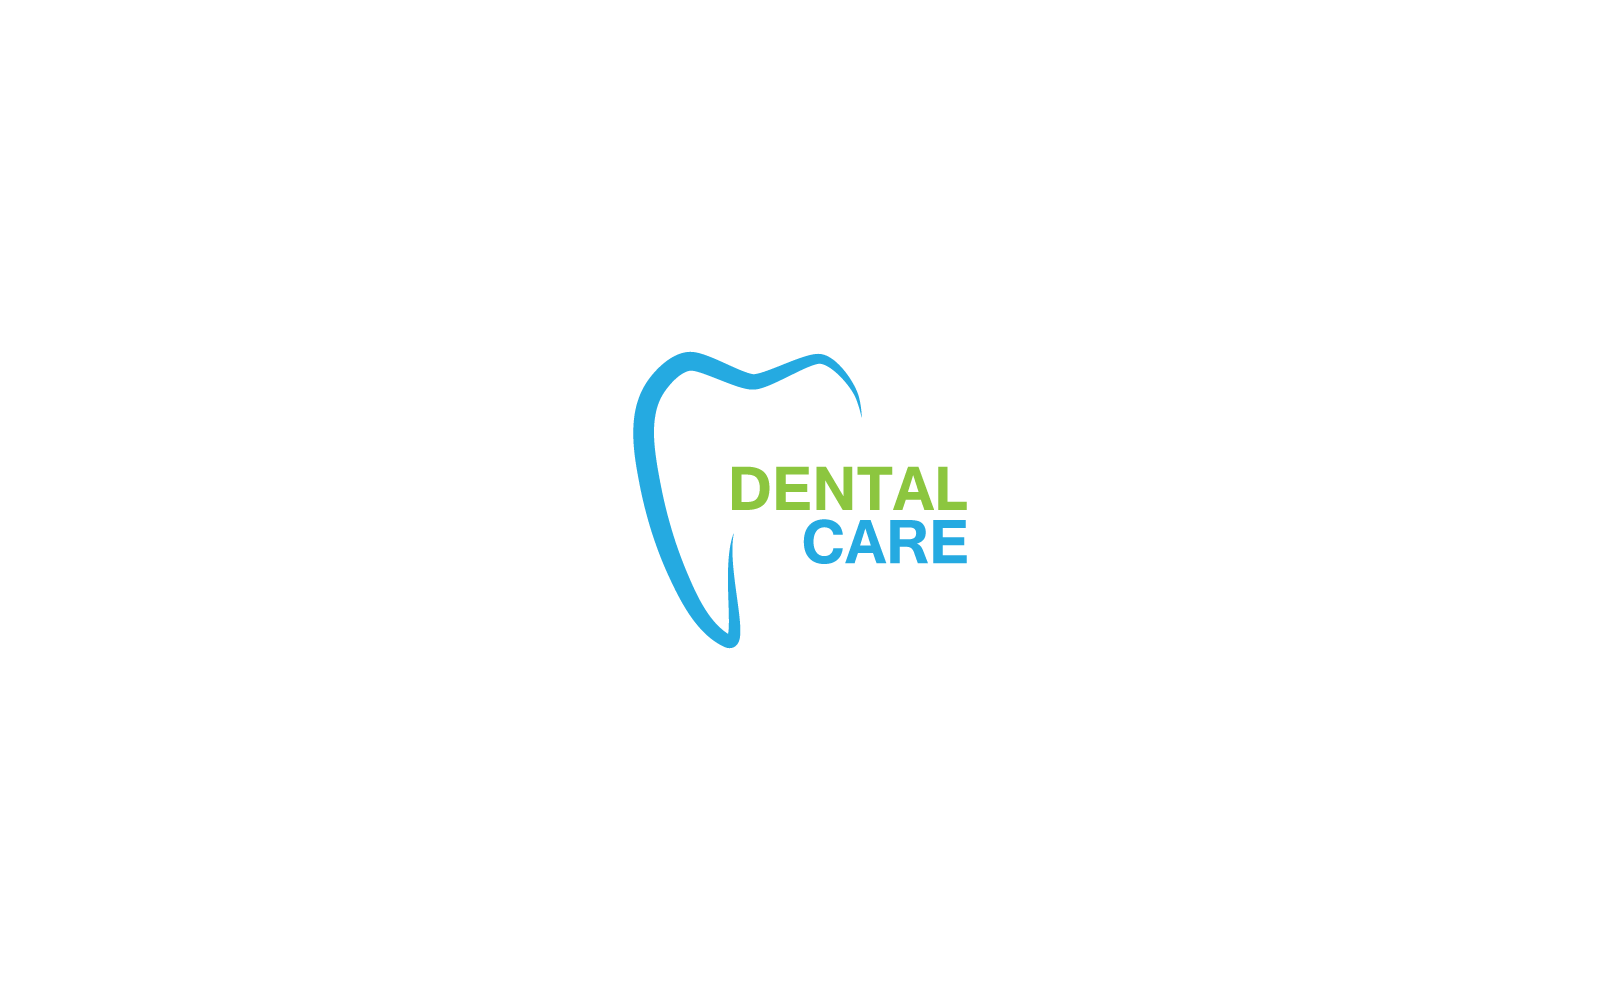 Dental logo design icon Template vector illustration